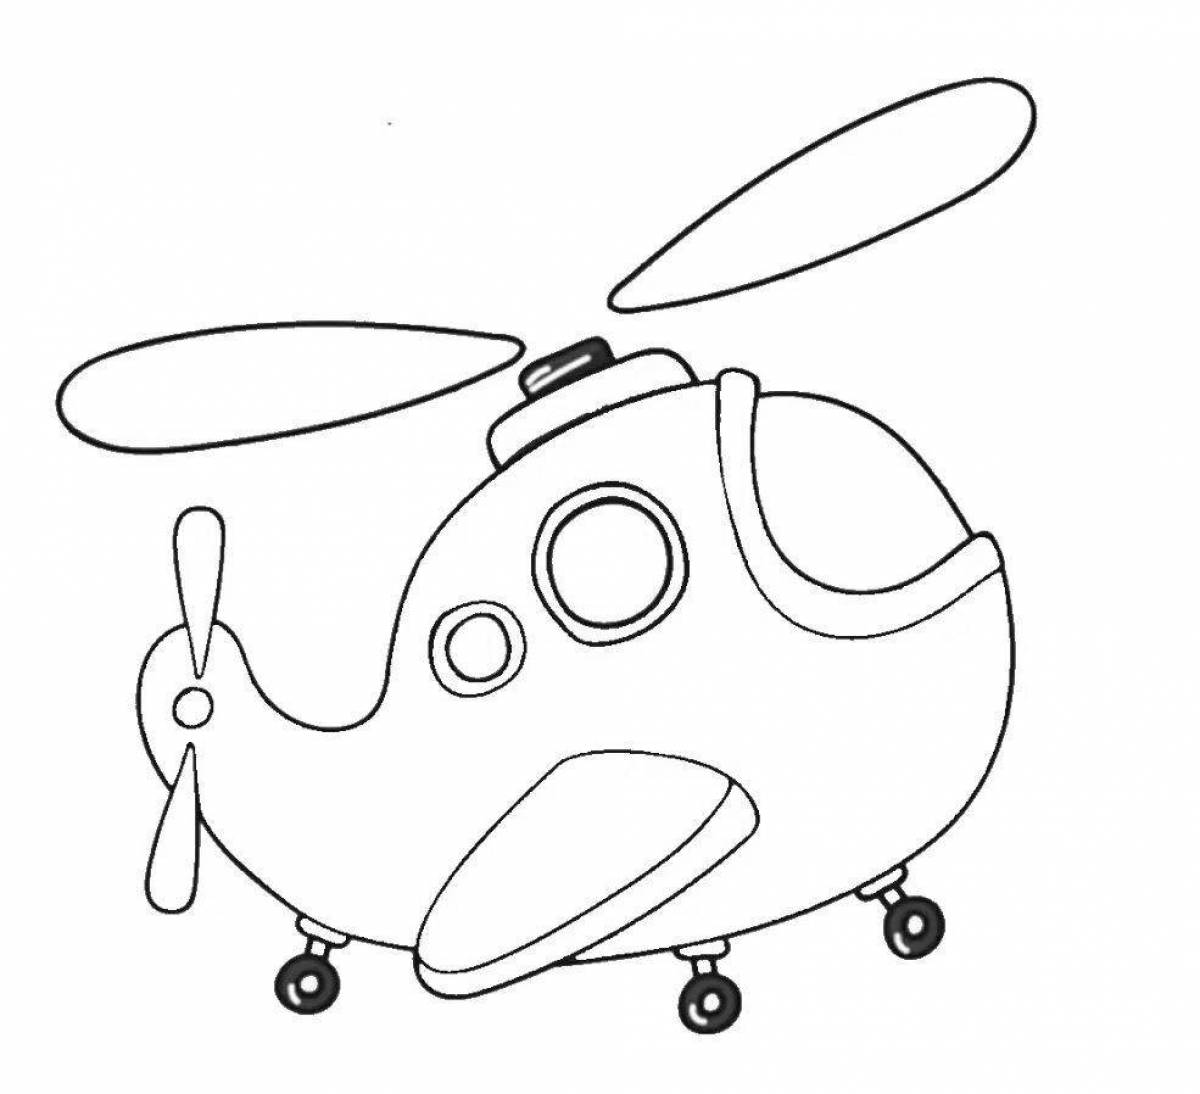 Замечательная раскраска вертолета для младенцев